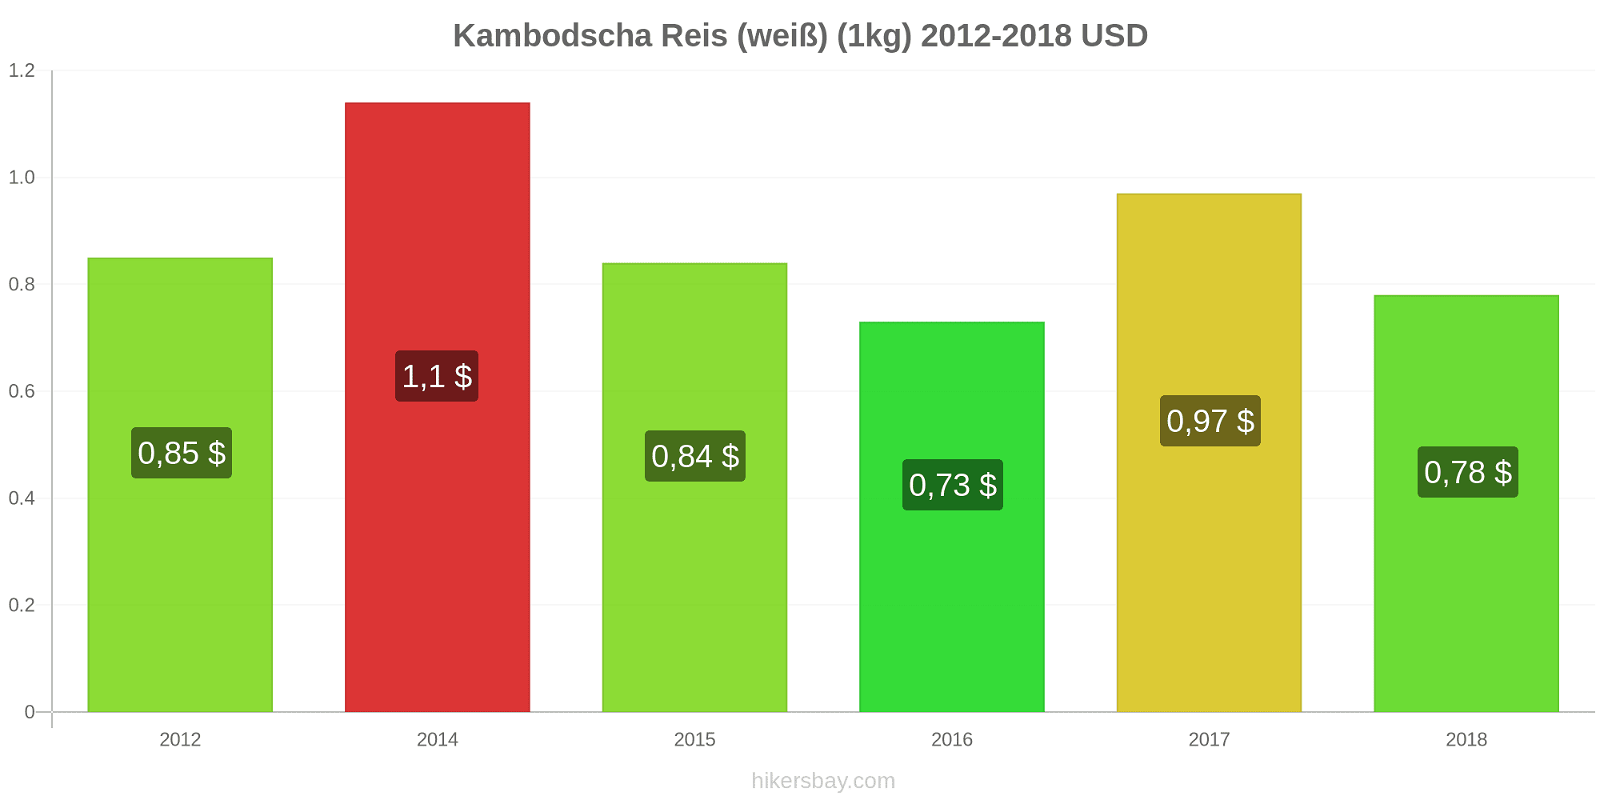 Kambodscha Preisänderungen Reis (weiß) (1kg) hikersbay.com